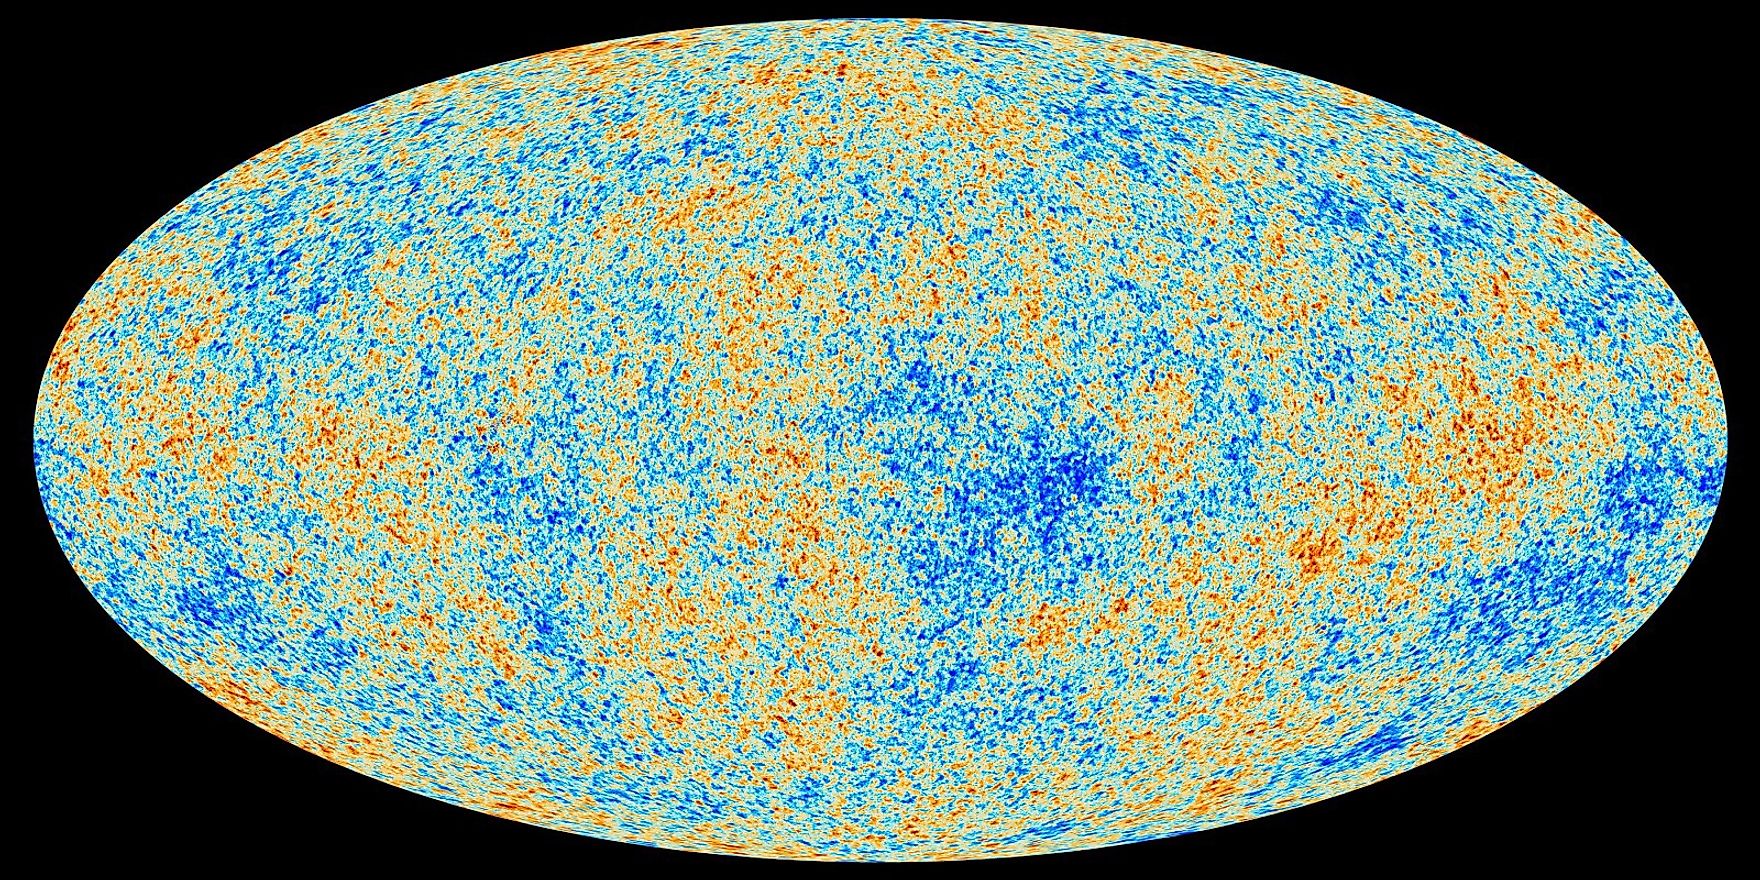 The Cosmic Microwave Background Radiation. Image credit: NASA